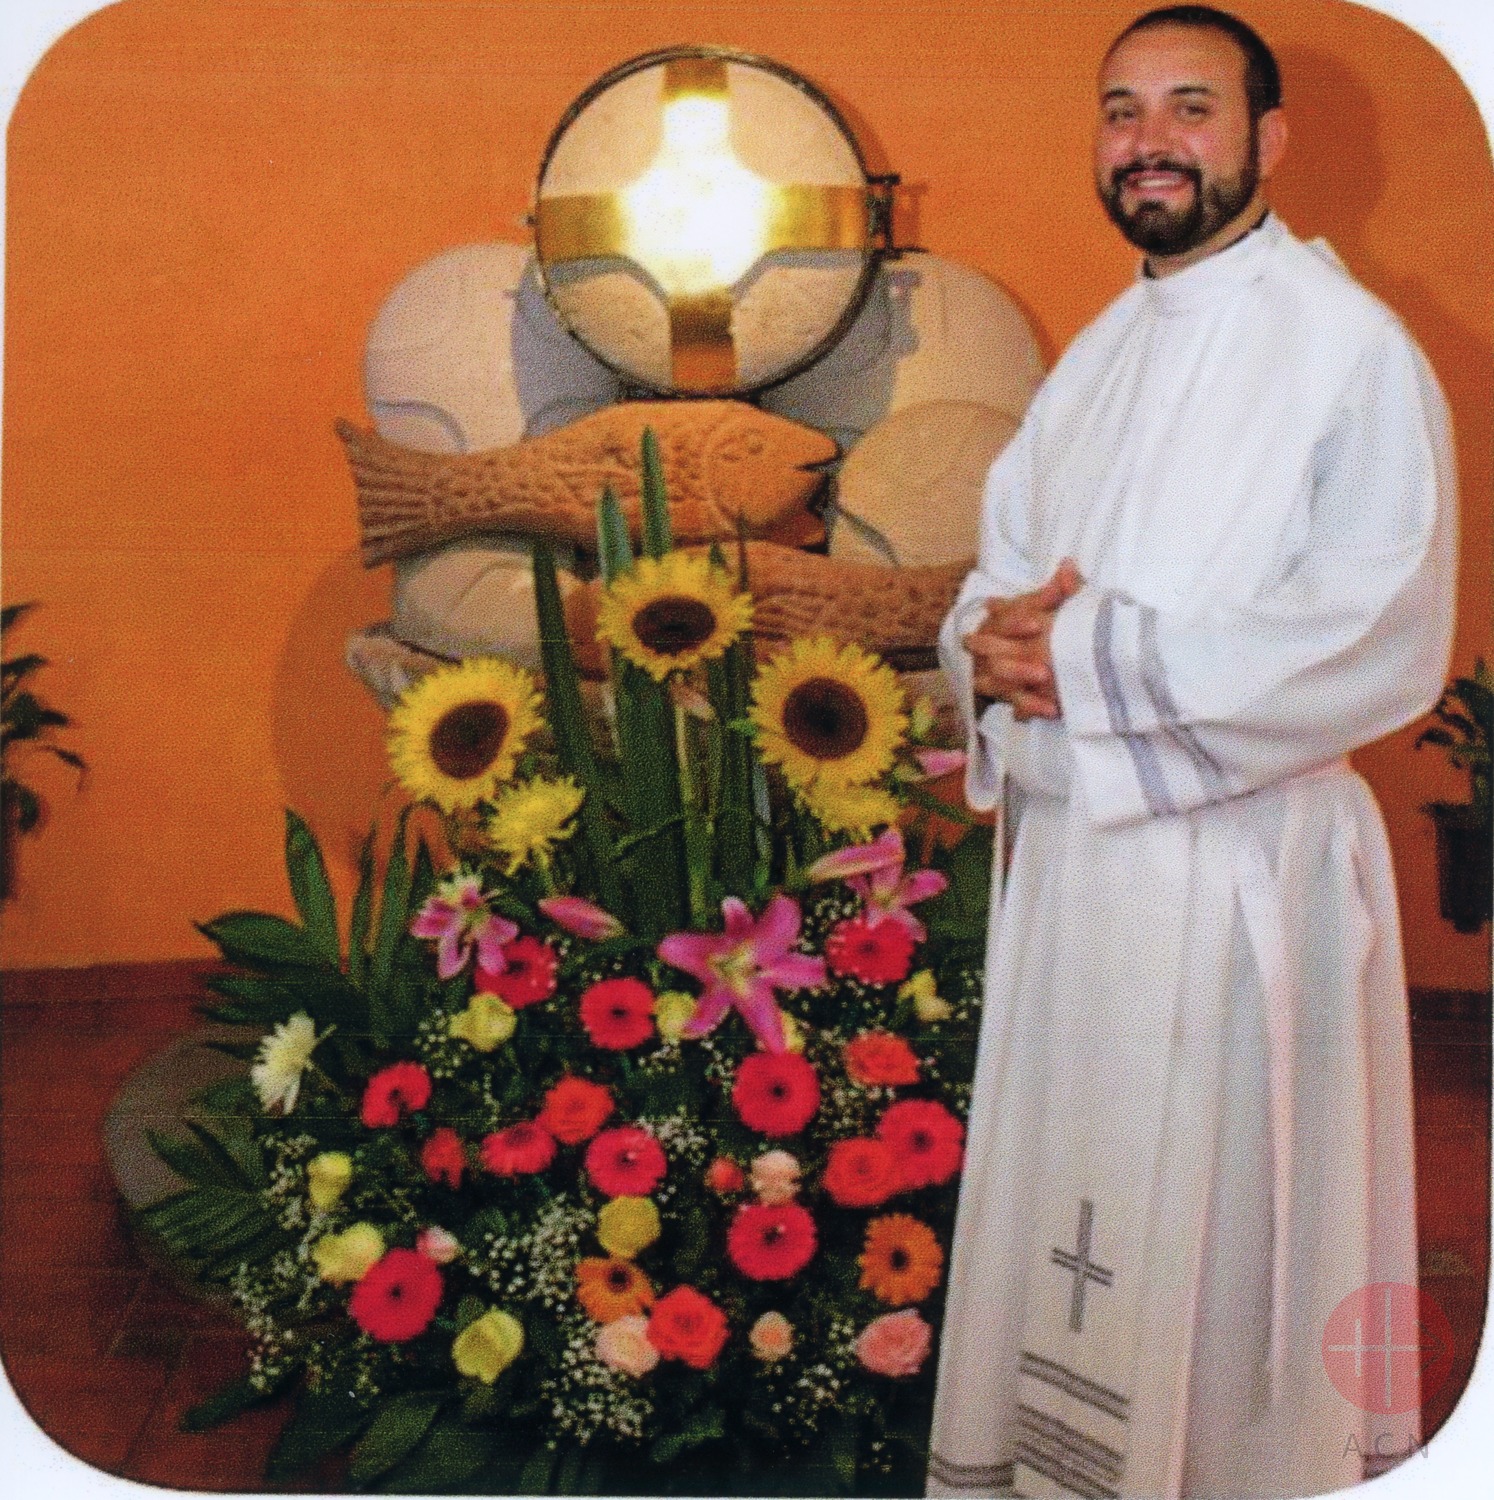 México Formation of 8 seminarians in the seminary Redemptoris Mater, 2021